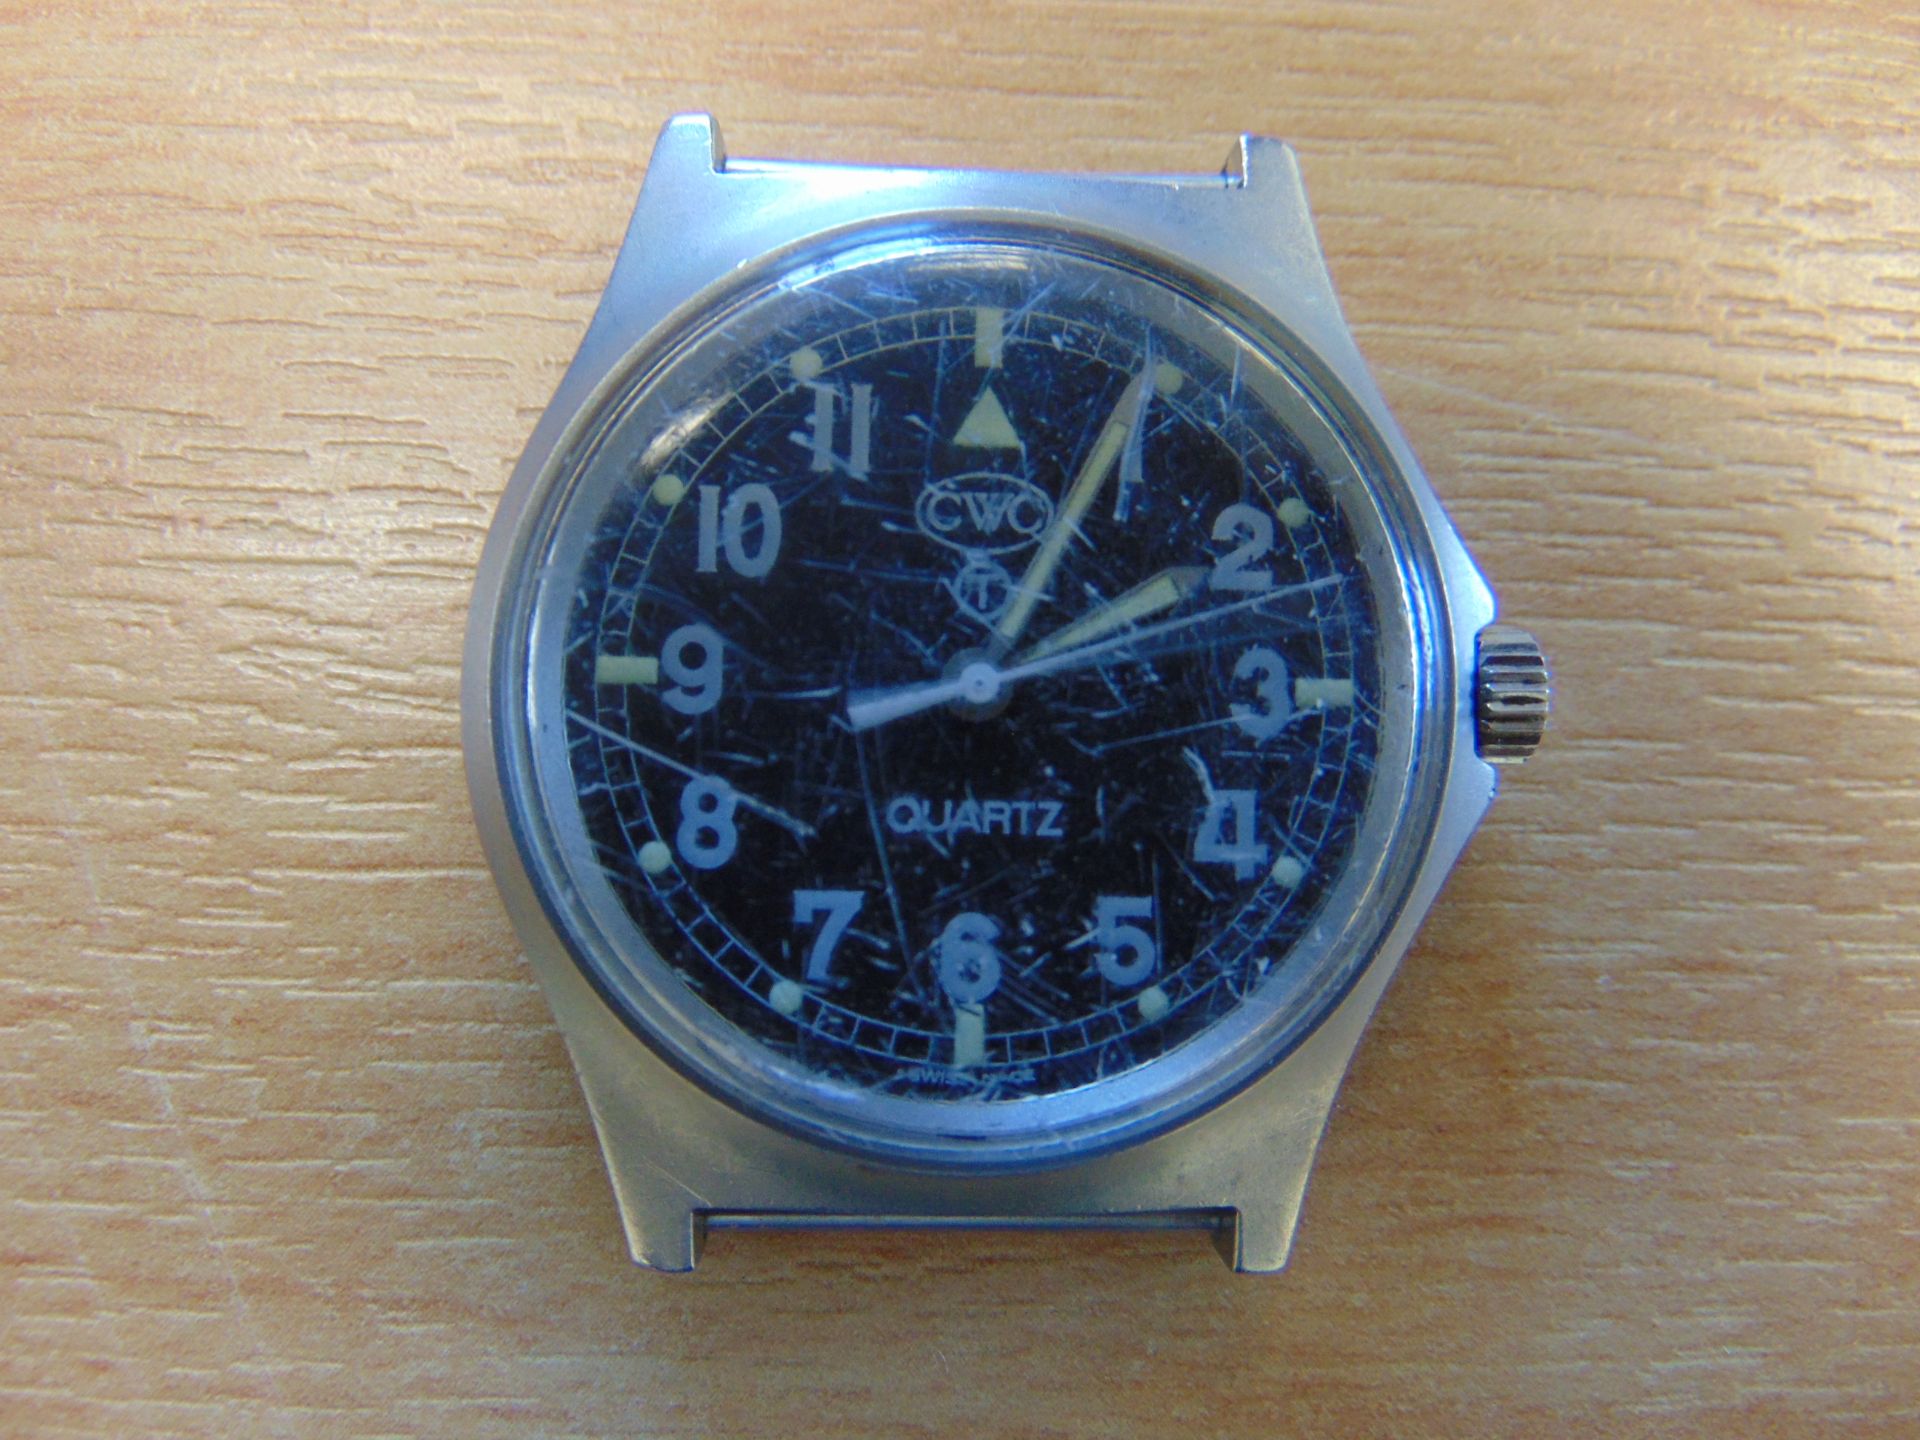 CWC (Cabot Watch Co) British Army W10 Service Watch, Date 1991, Gulf War 1, New Batt/Strap - Image 3 of 5